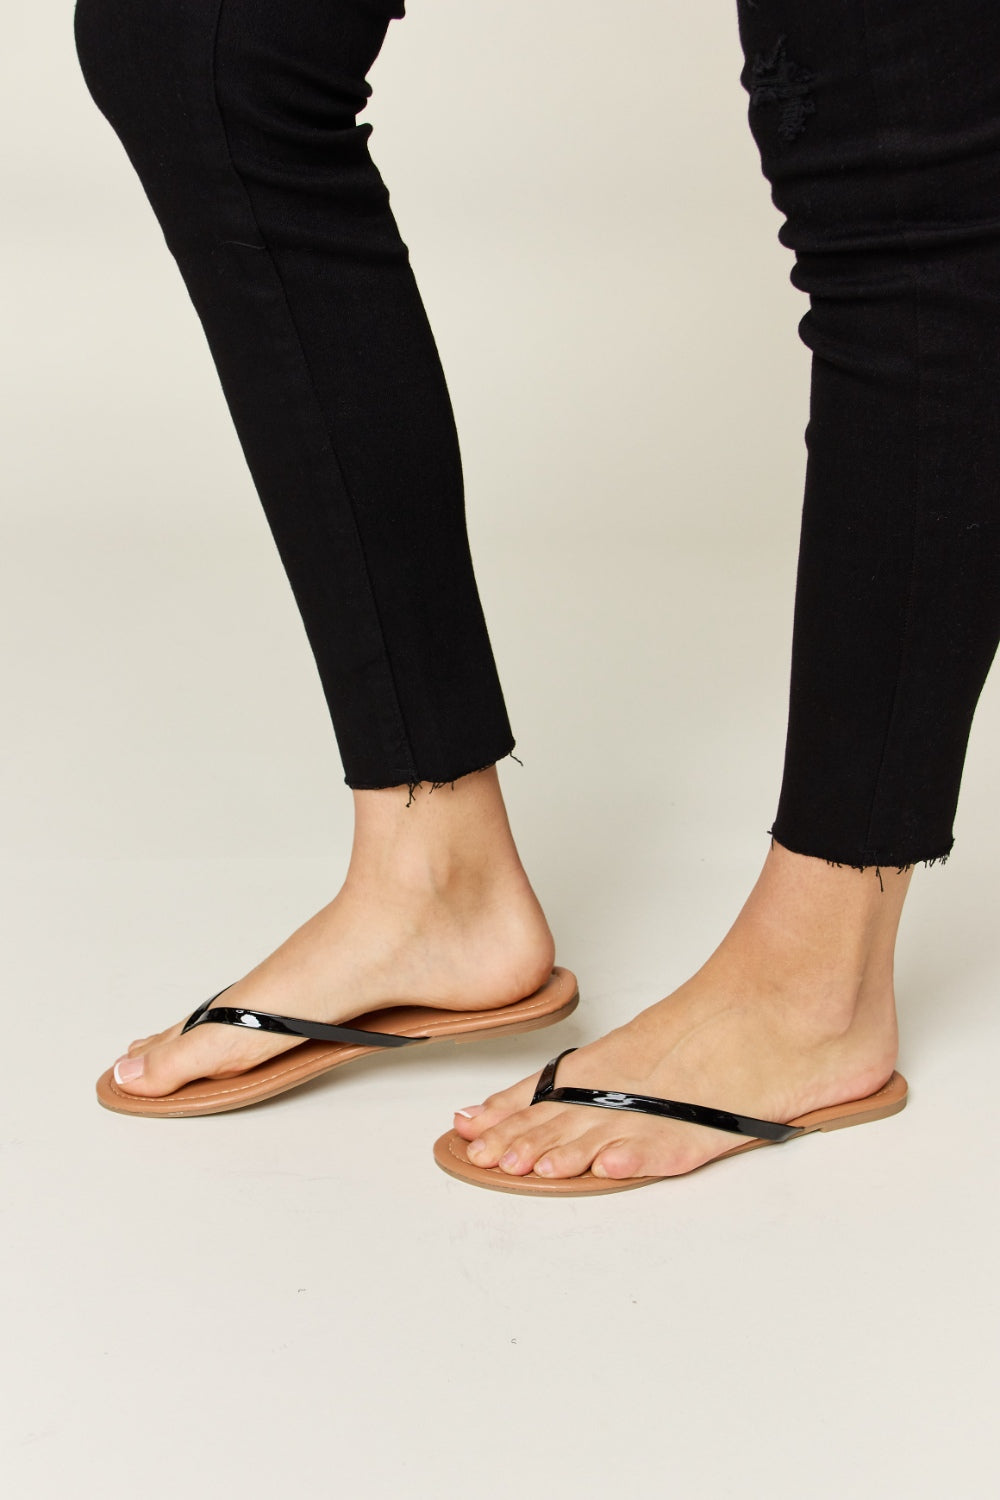 WILD DIVA PU Leather Flip Flop Black Flat Open Toe Comfy Sandals